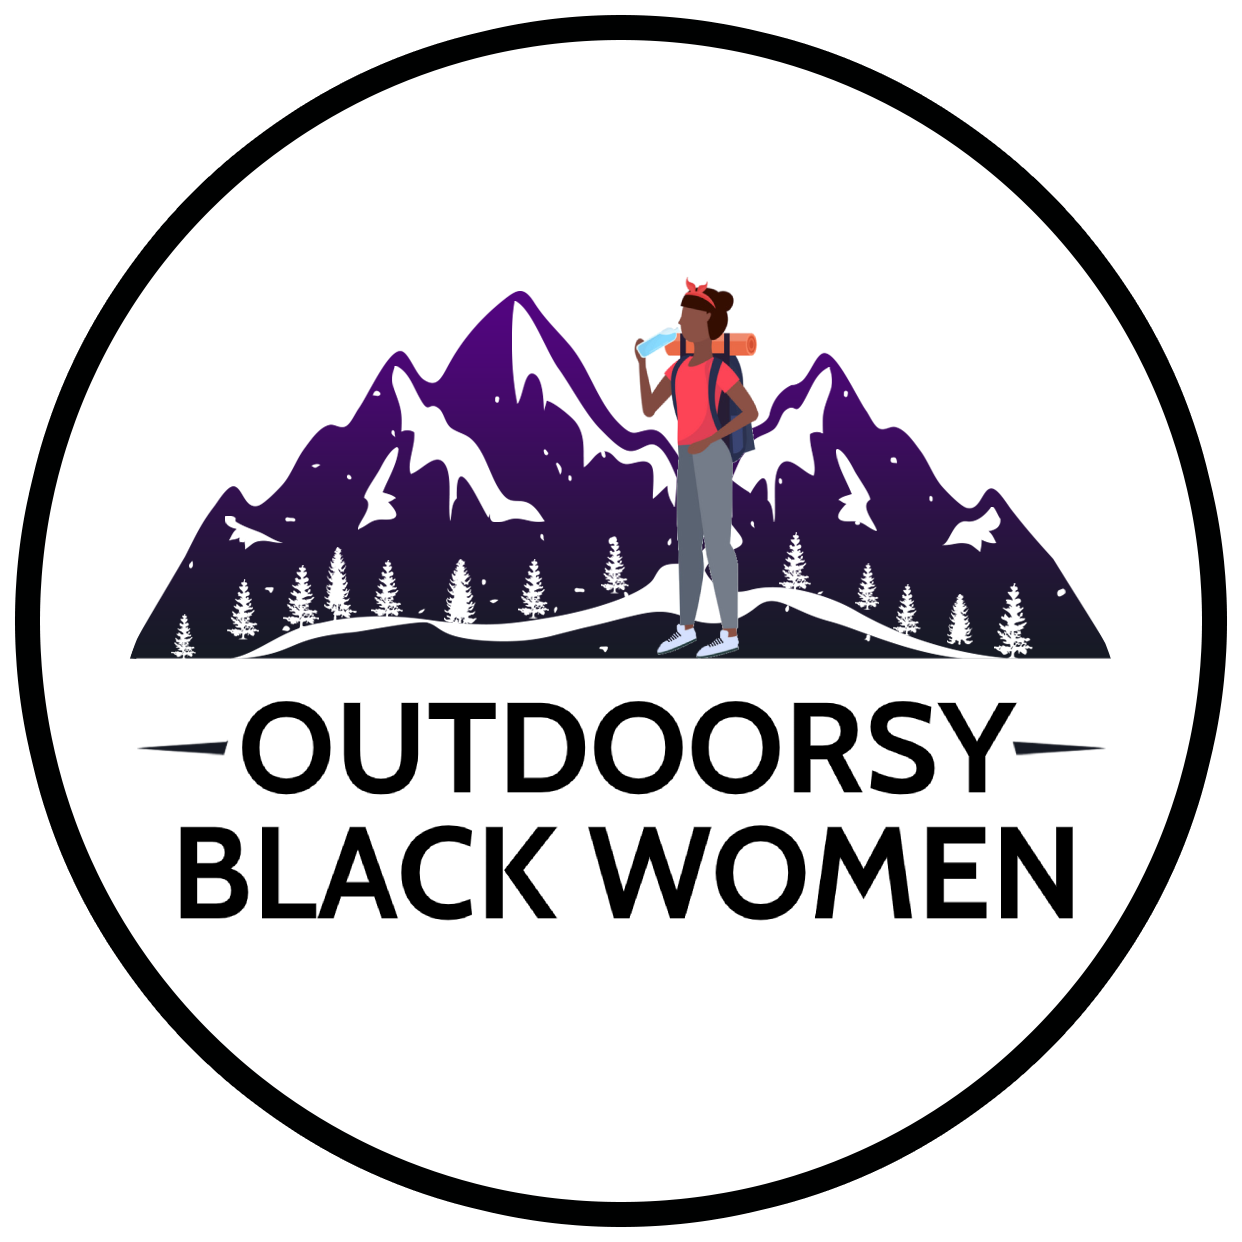 A Social Network For Black Women - Outdoorsy Black Women